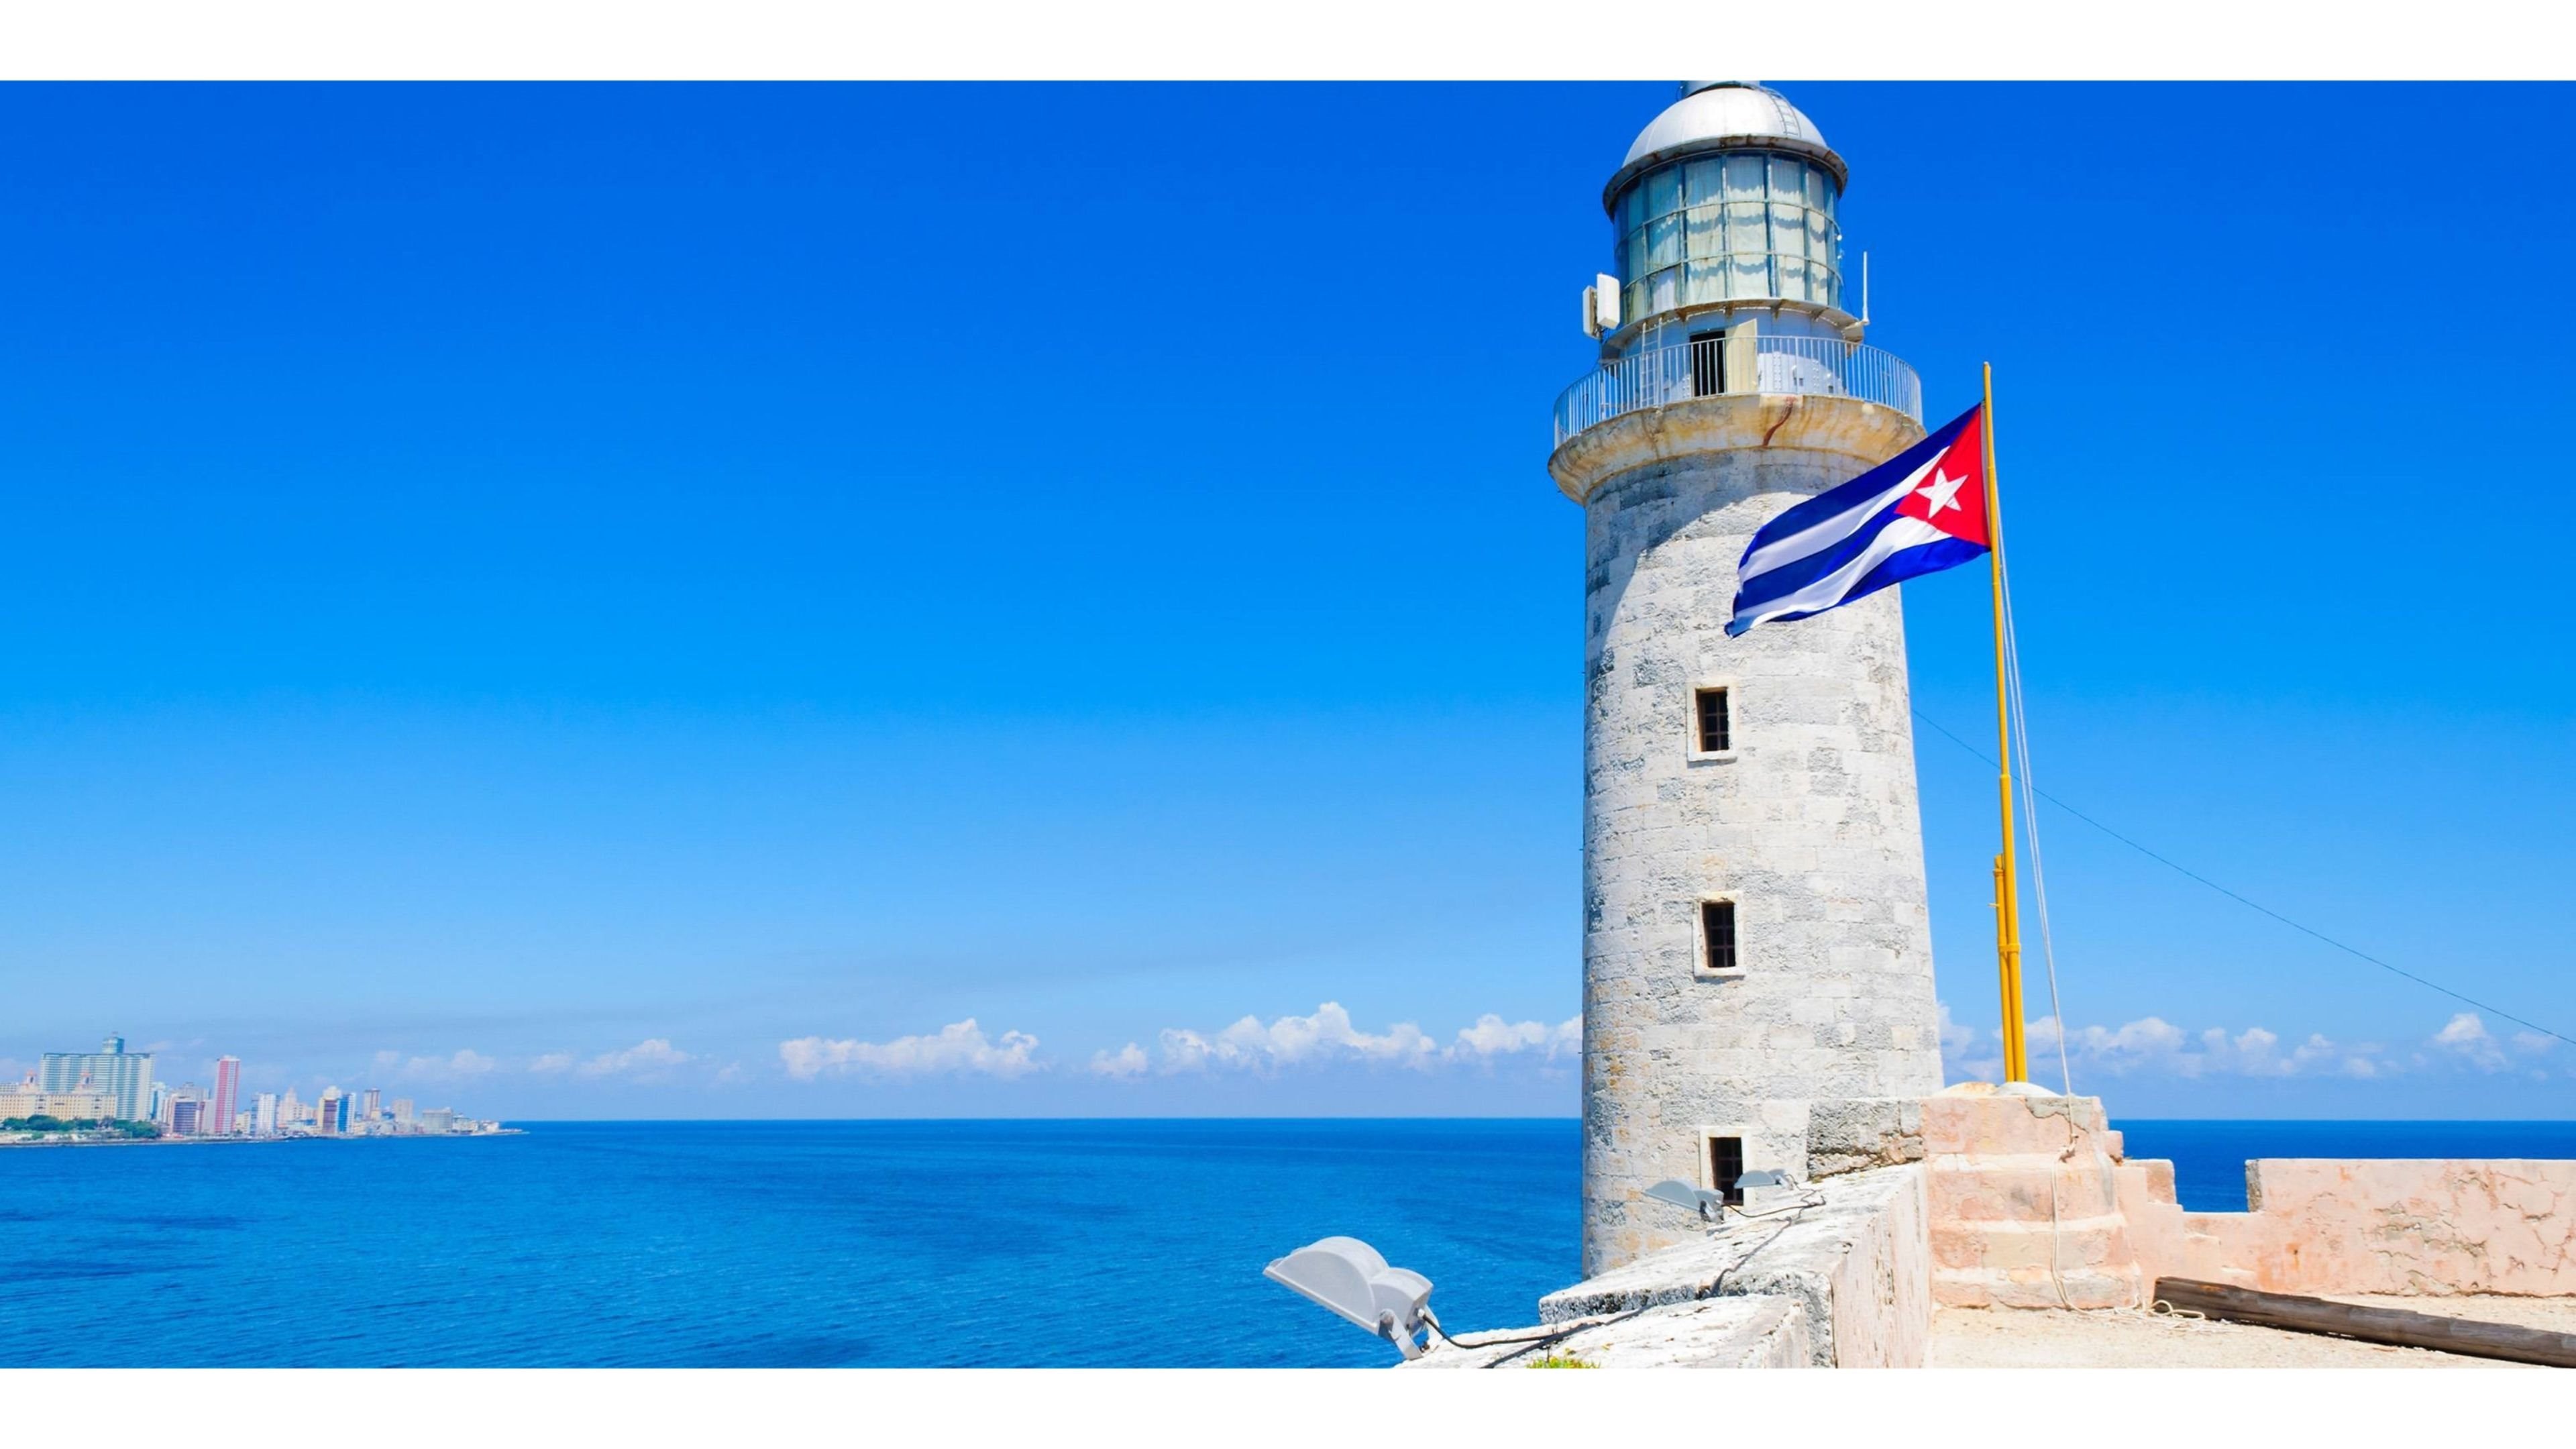 3840x2160, New 2016 Havana, Cuba 4k Wallpapers 
 Data - Havana Cuba Wallpaper Hd - HD Wallpaper 